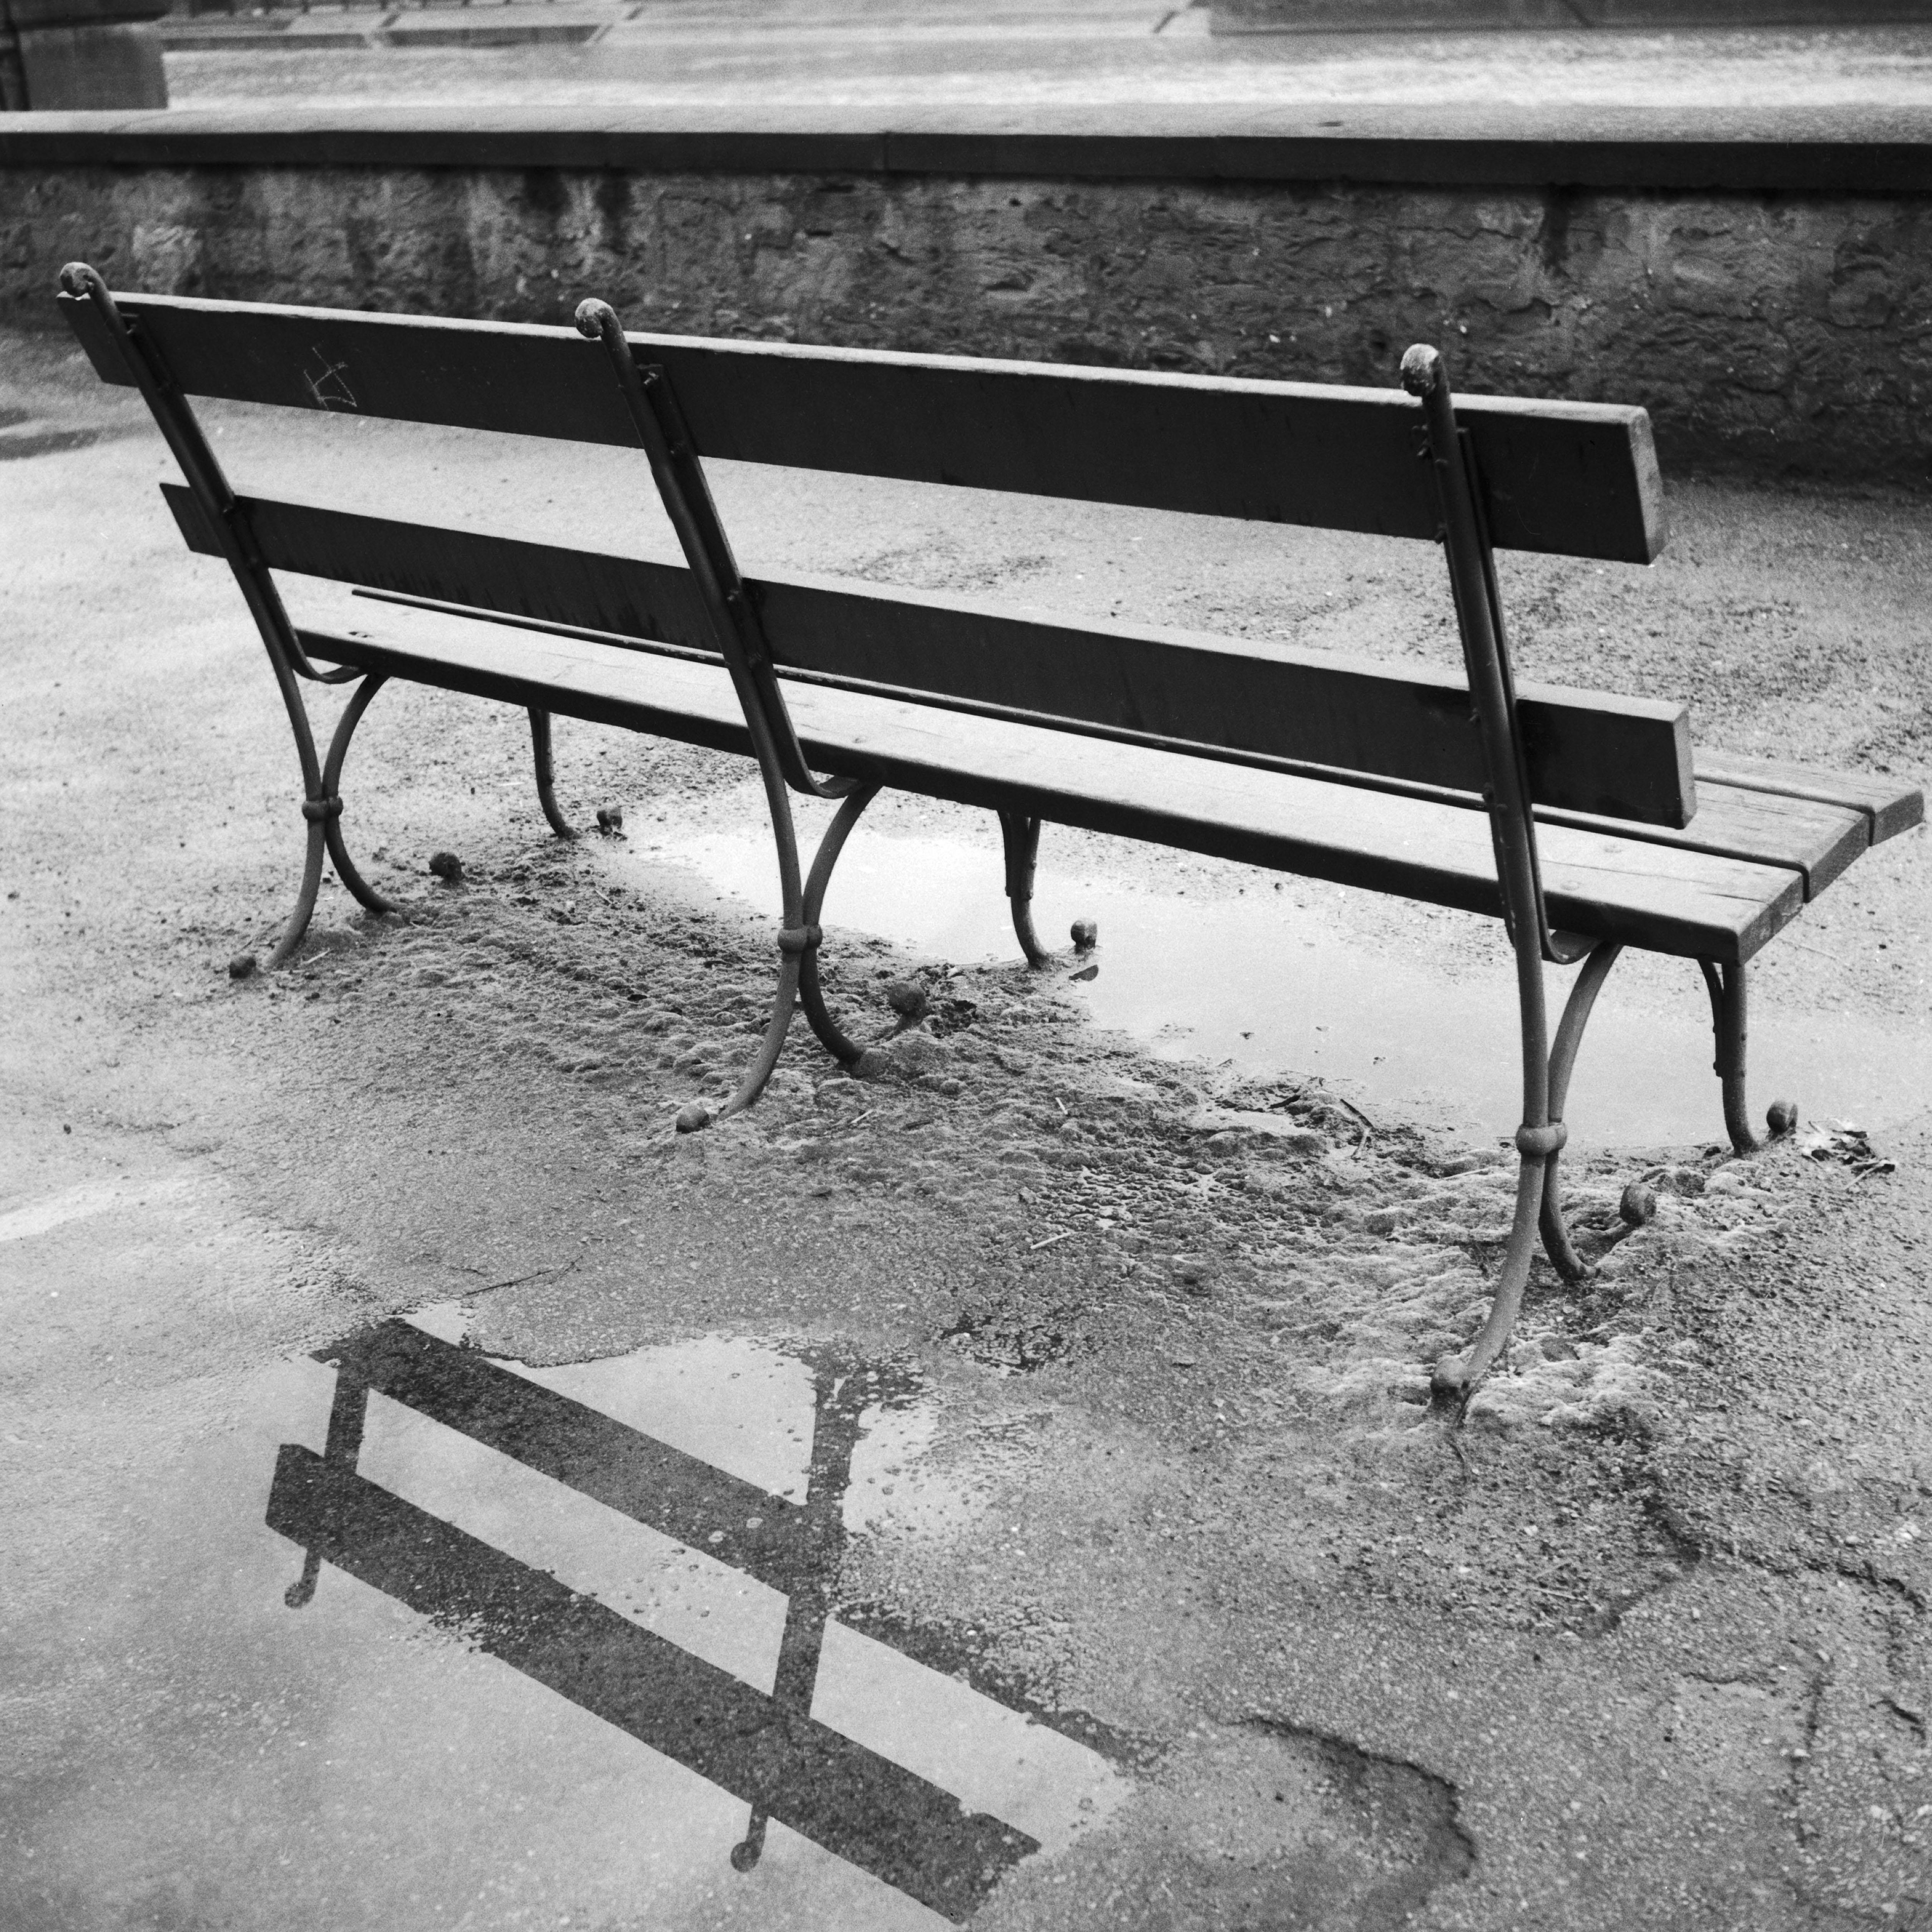 Karl Heinrich Lämmel Black and White Photograph - Public bench at river Neckar near Heidelberg, Germany 1936, Printed Later 